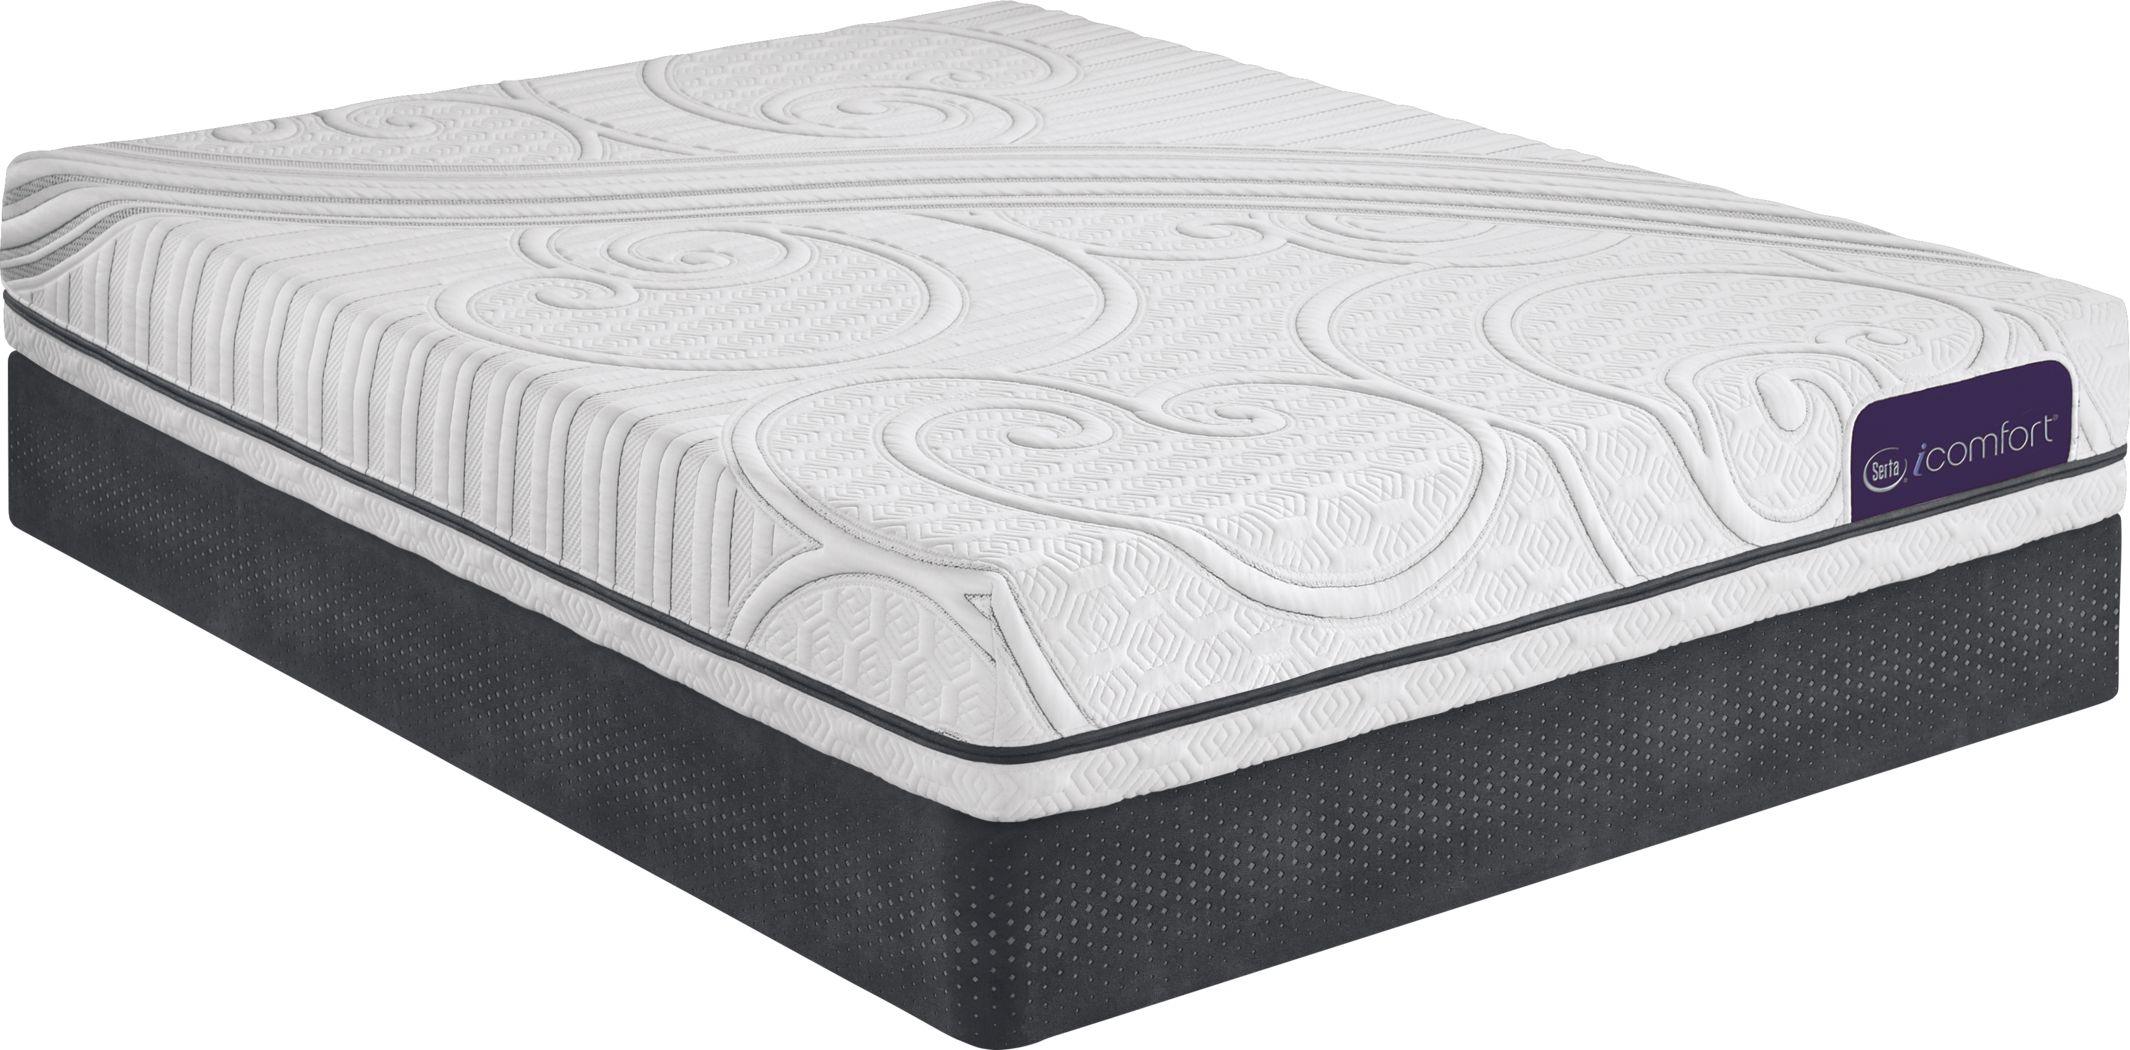 dimensions of serta icomfort foresight mattress